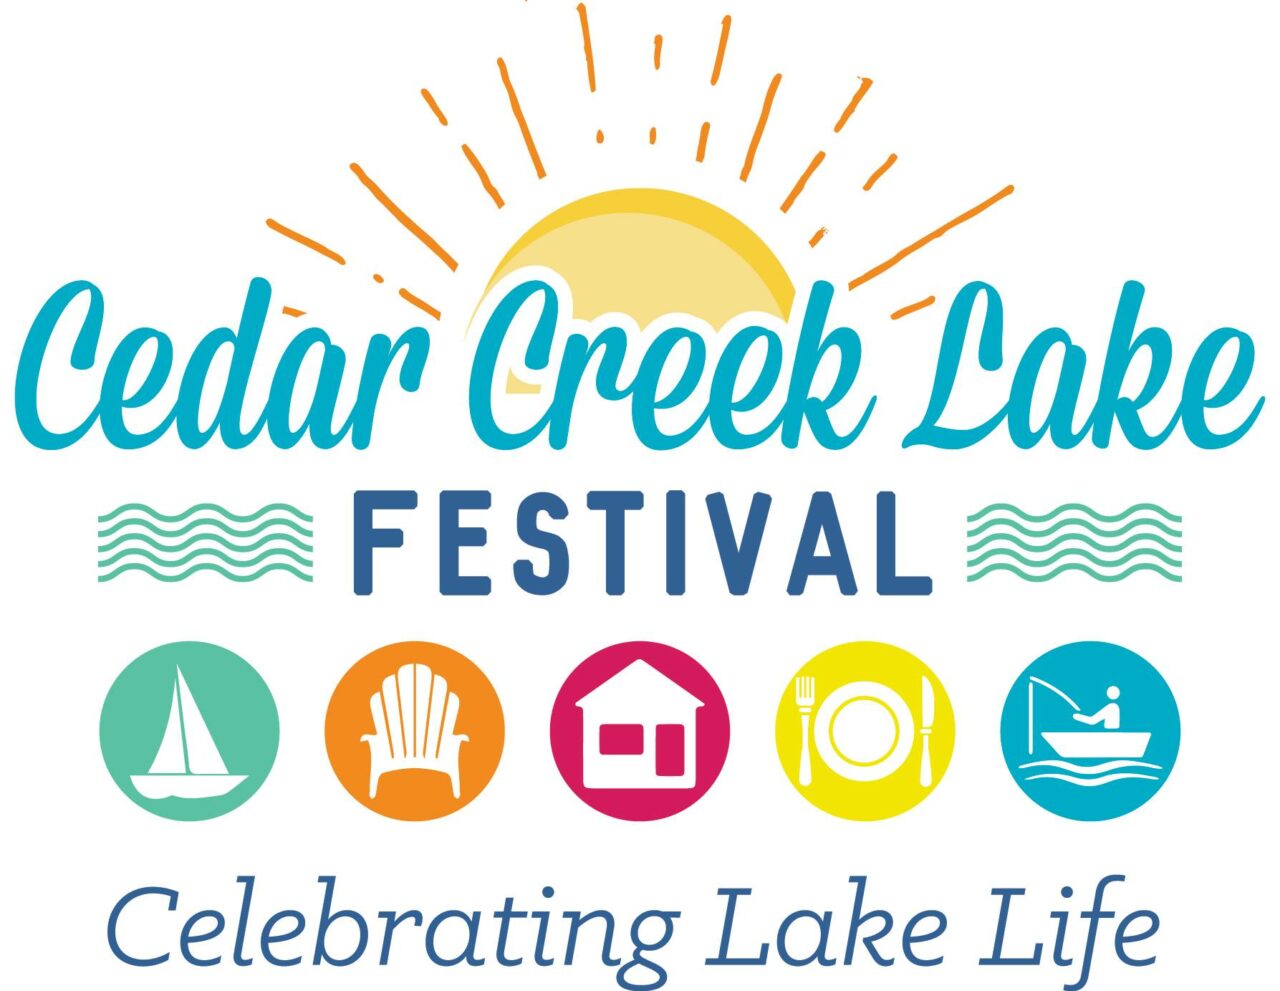 Cedar Creek Lake Festival